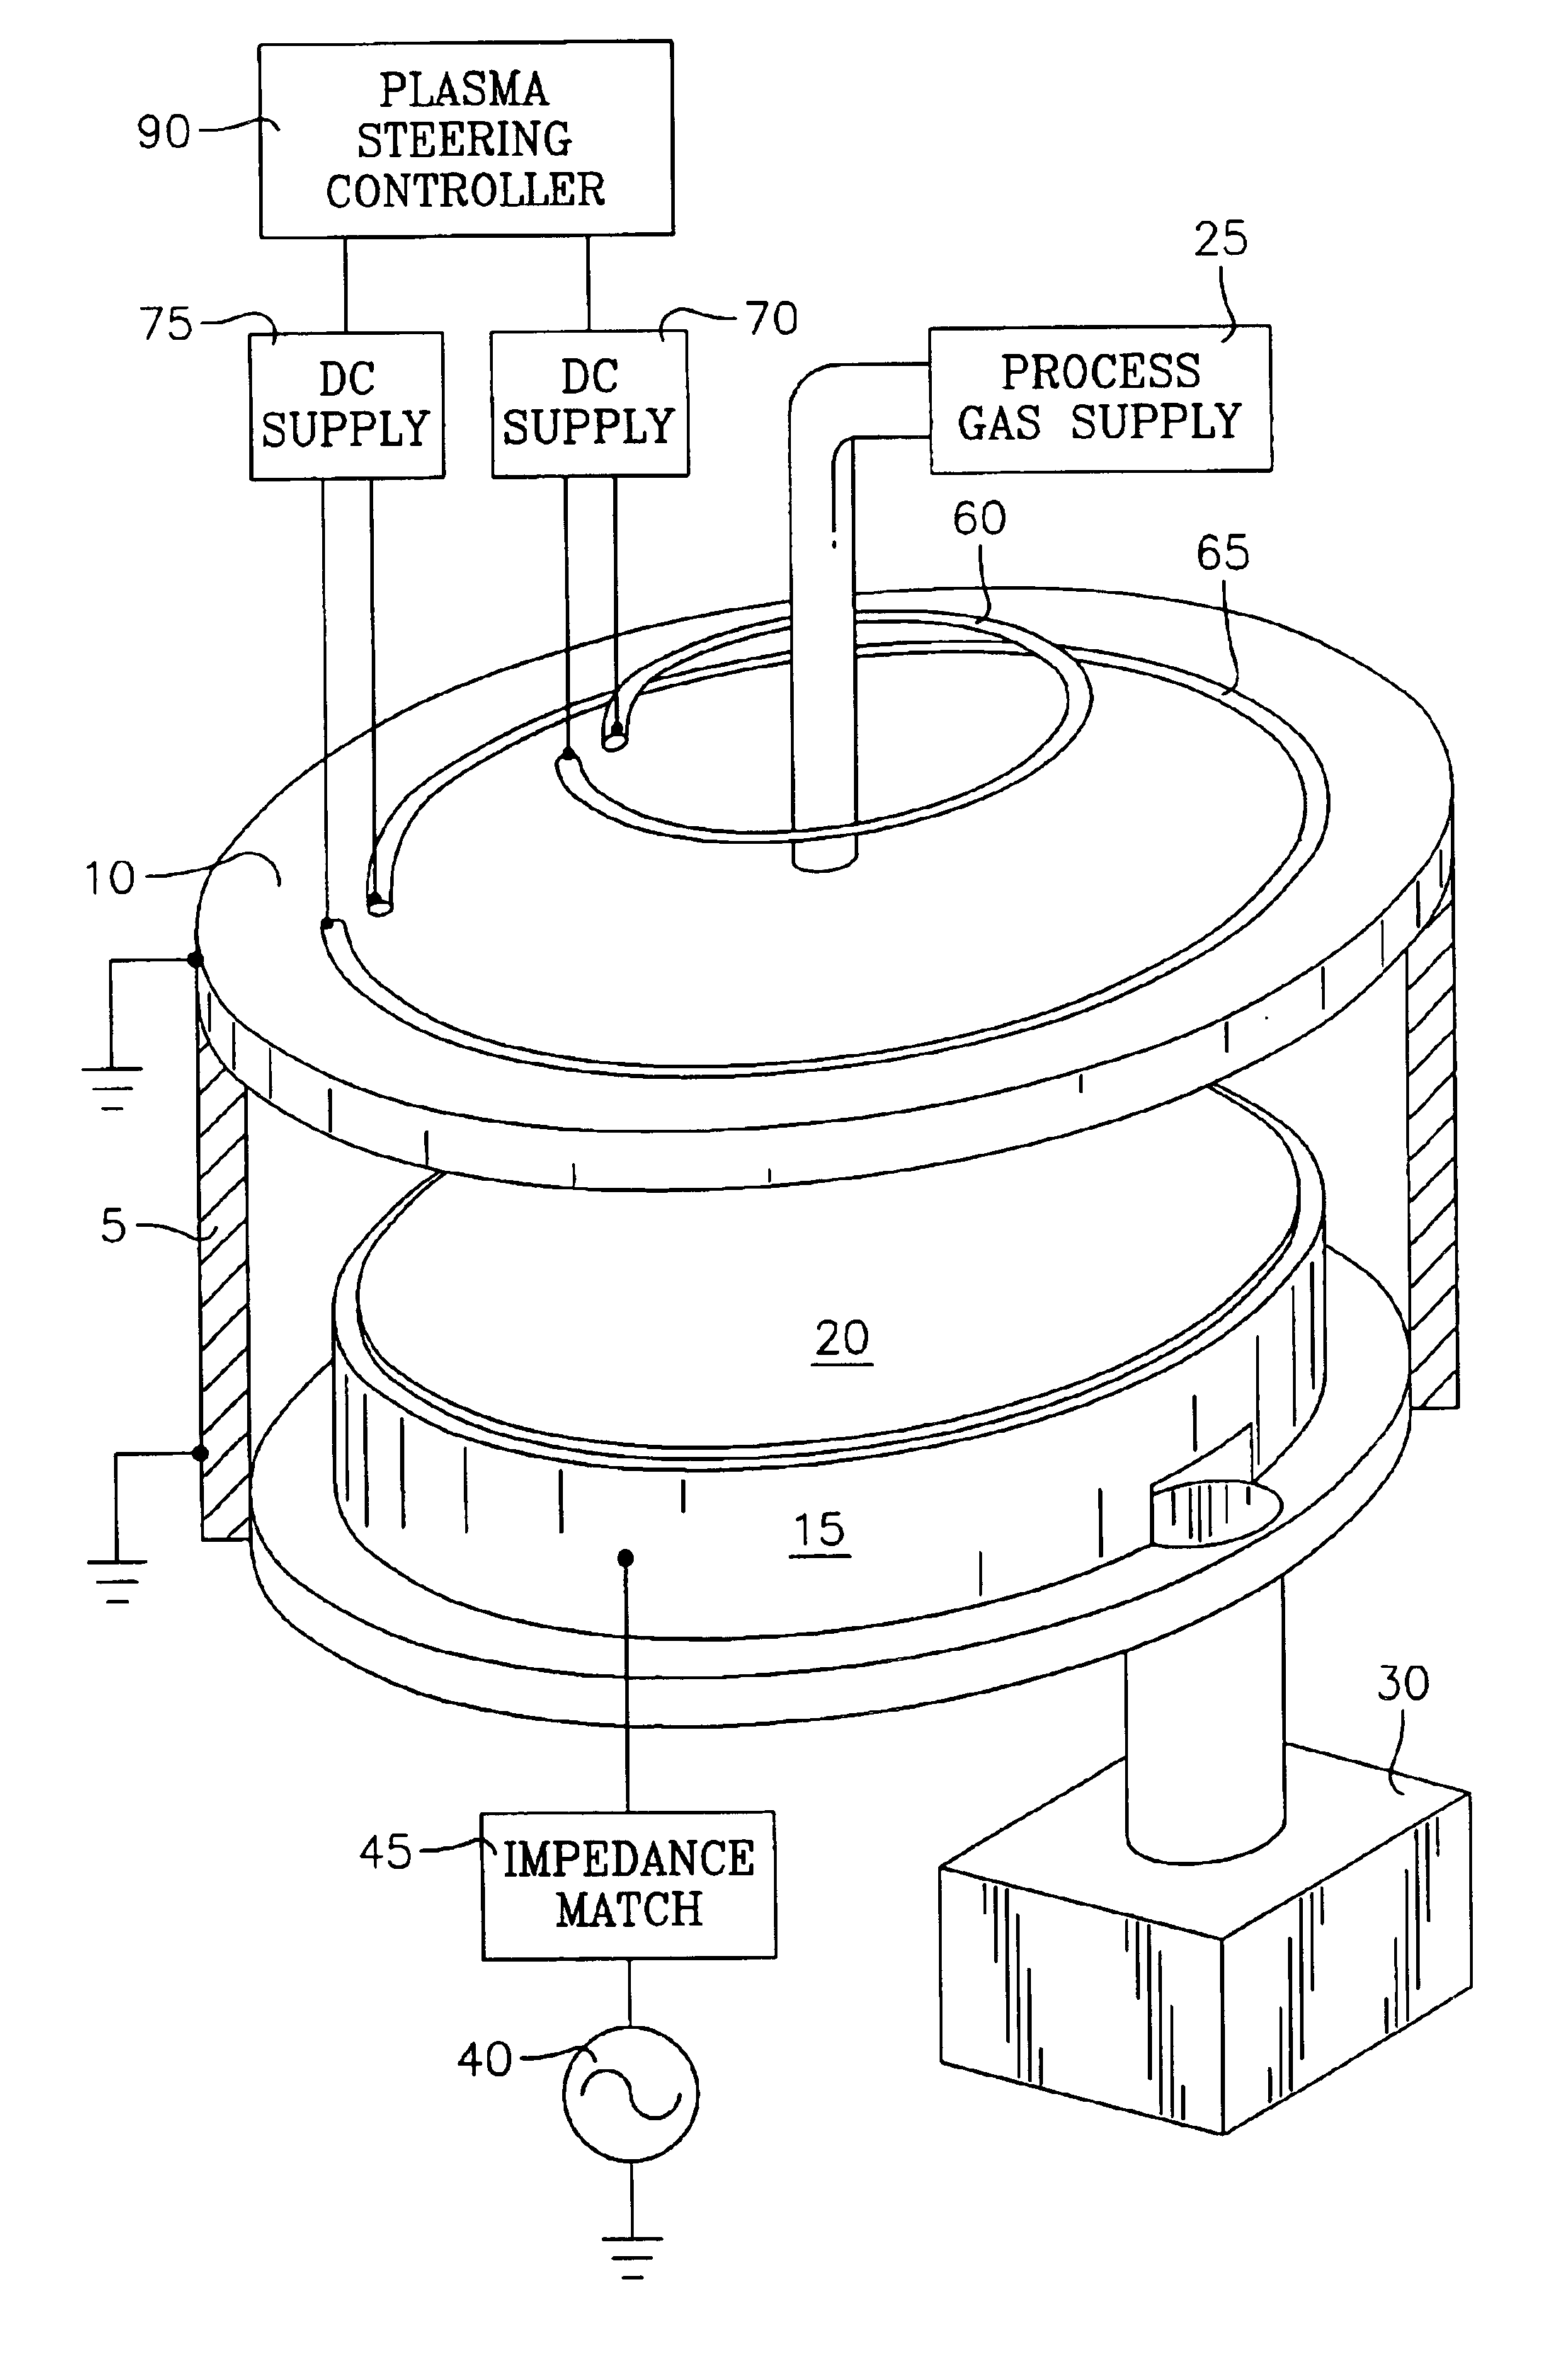 Capacitively coupled plasma reactor with uniform radial distribution of plasma